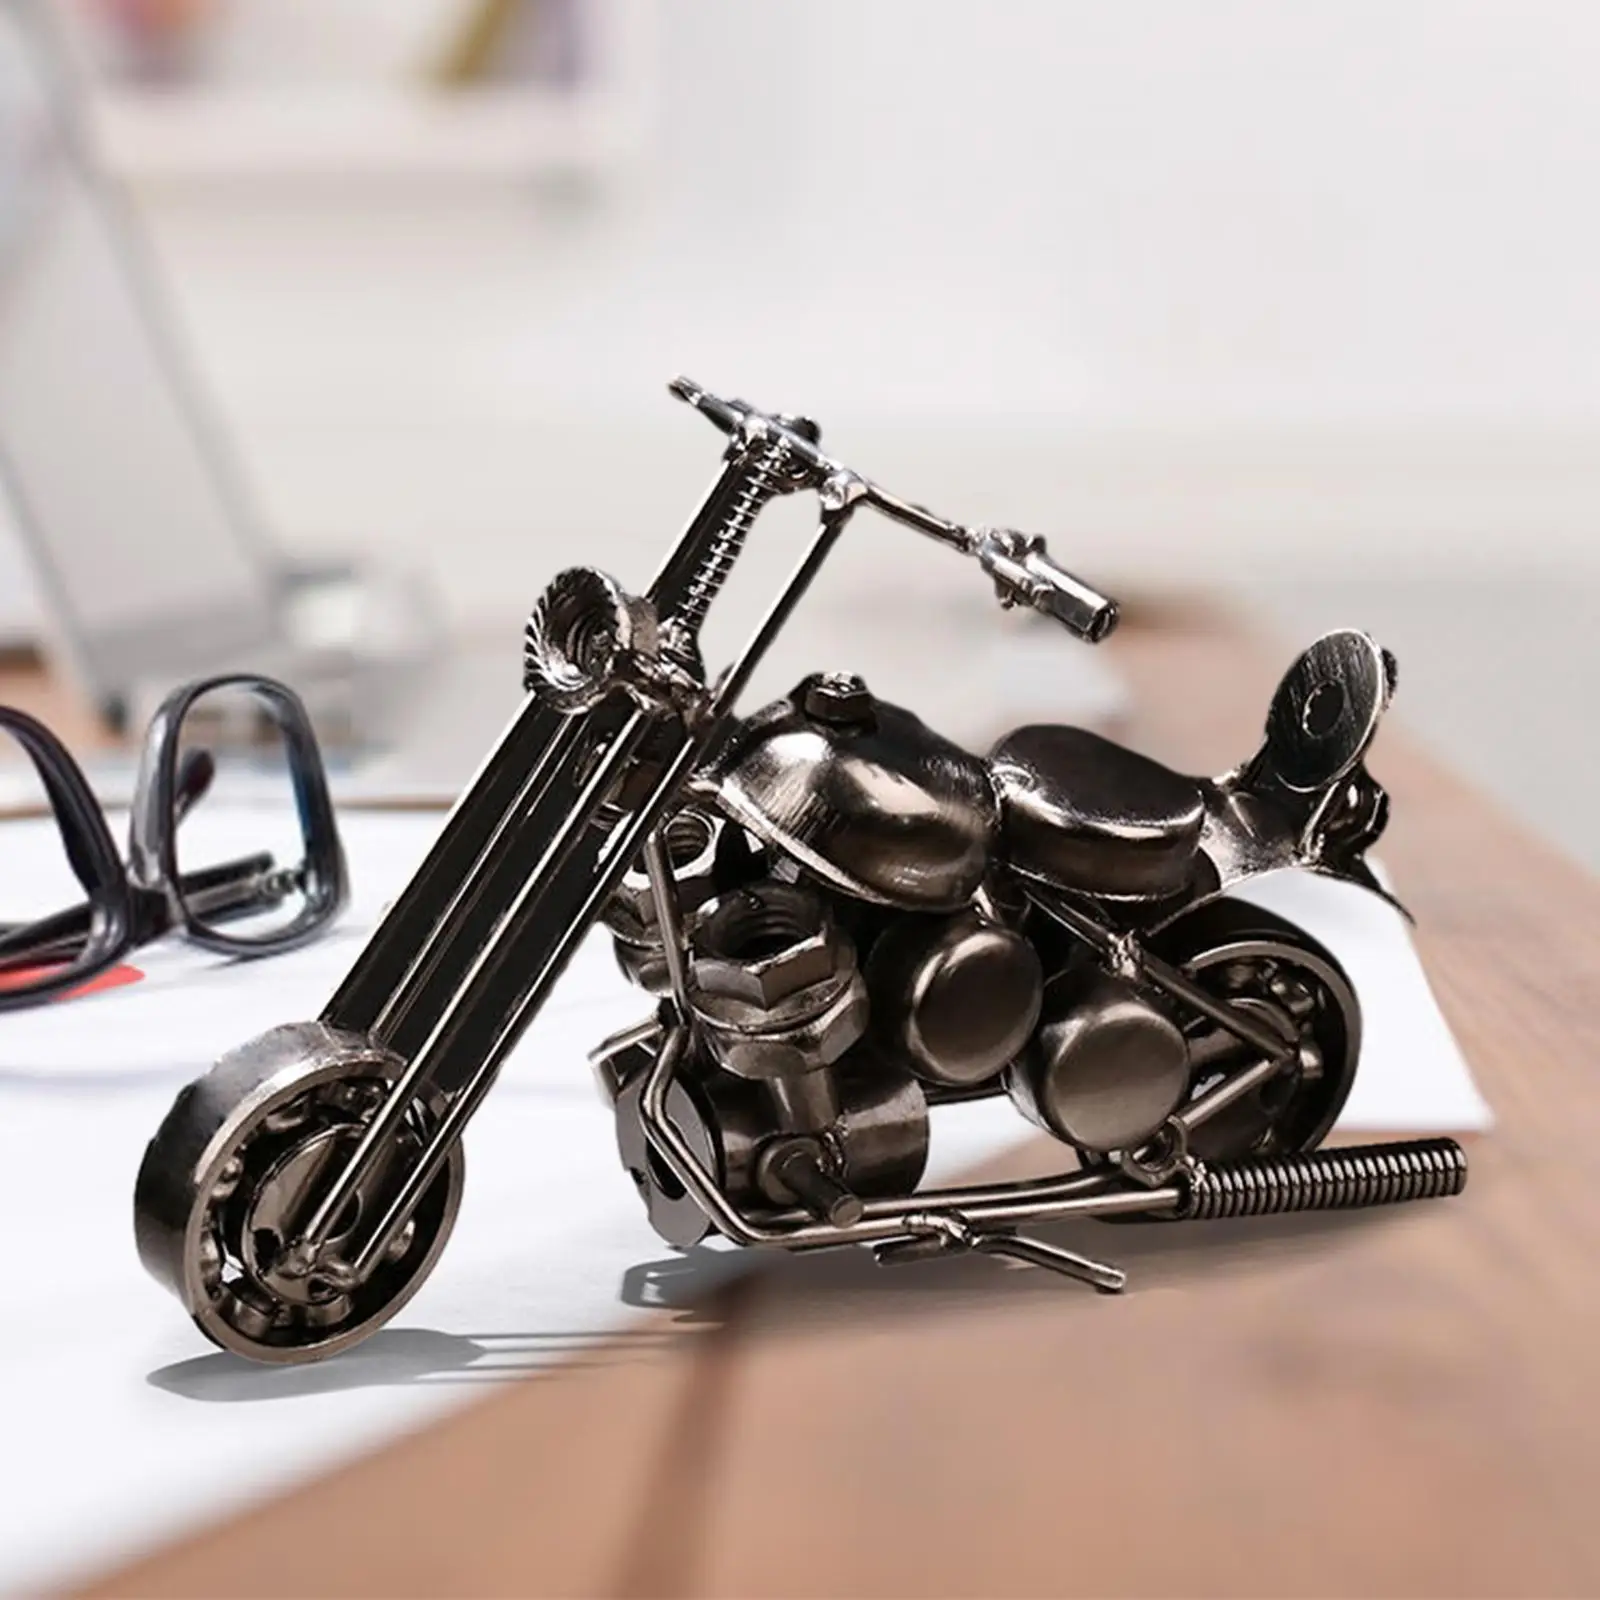 Metal Motorcycle Model Motorcycle Sculpture Artwork Birthday Vintage Style Motorcycle Figurine for Office Desk Dad Adults Men